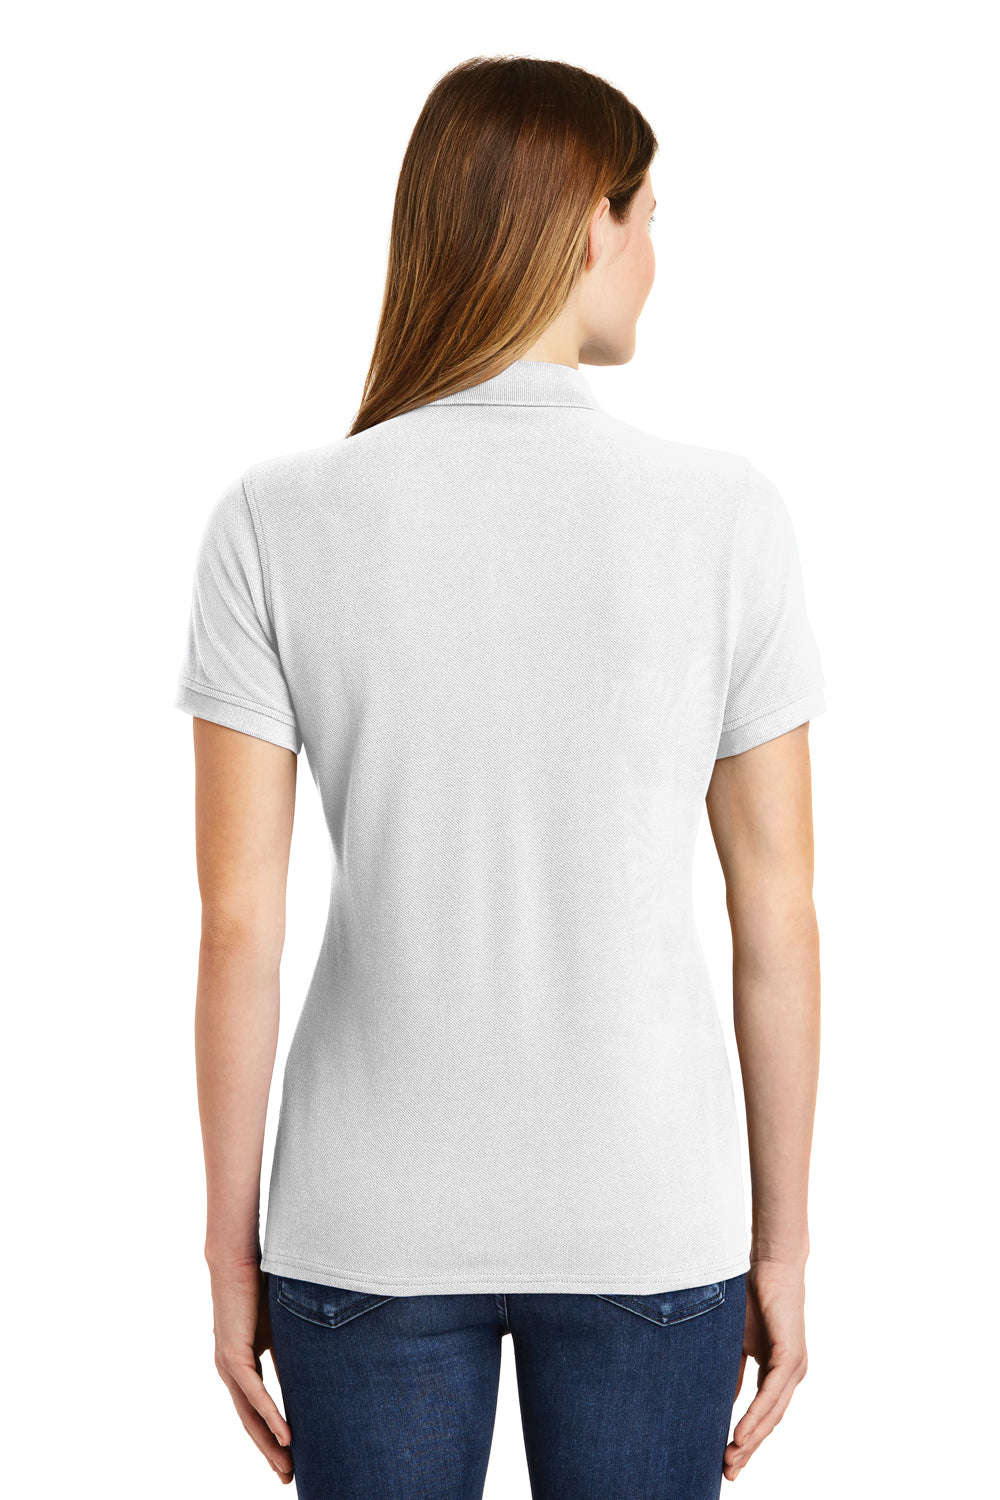 Port & Company LKP1500 Womens Stain Resistant Short Sleeve Polo Shirt White Back